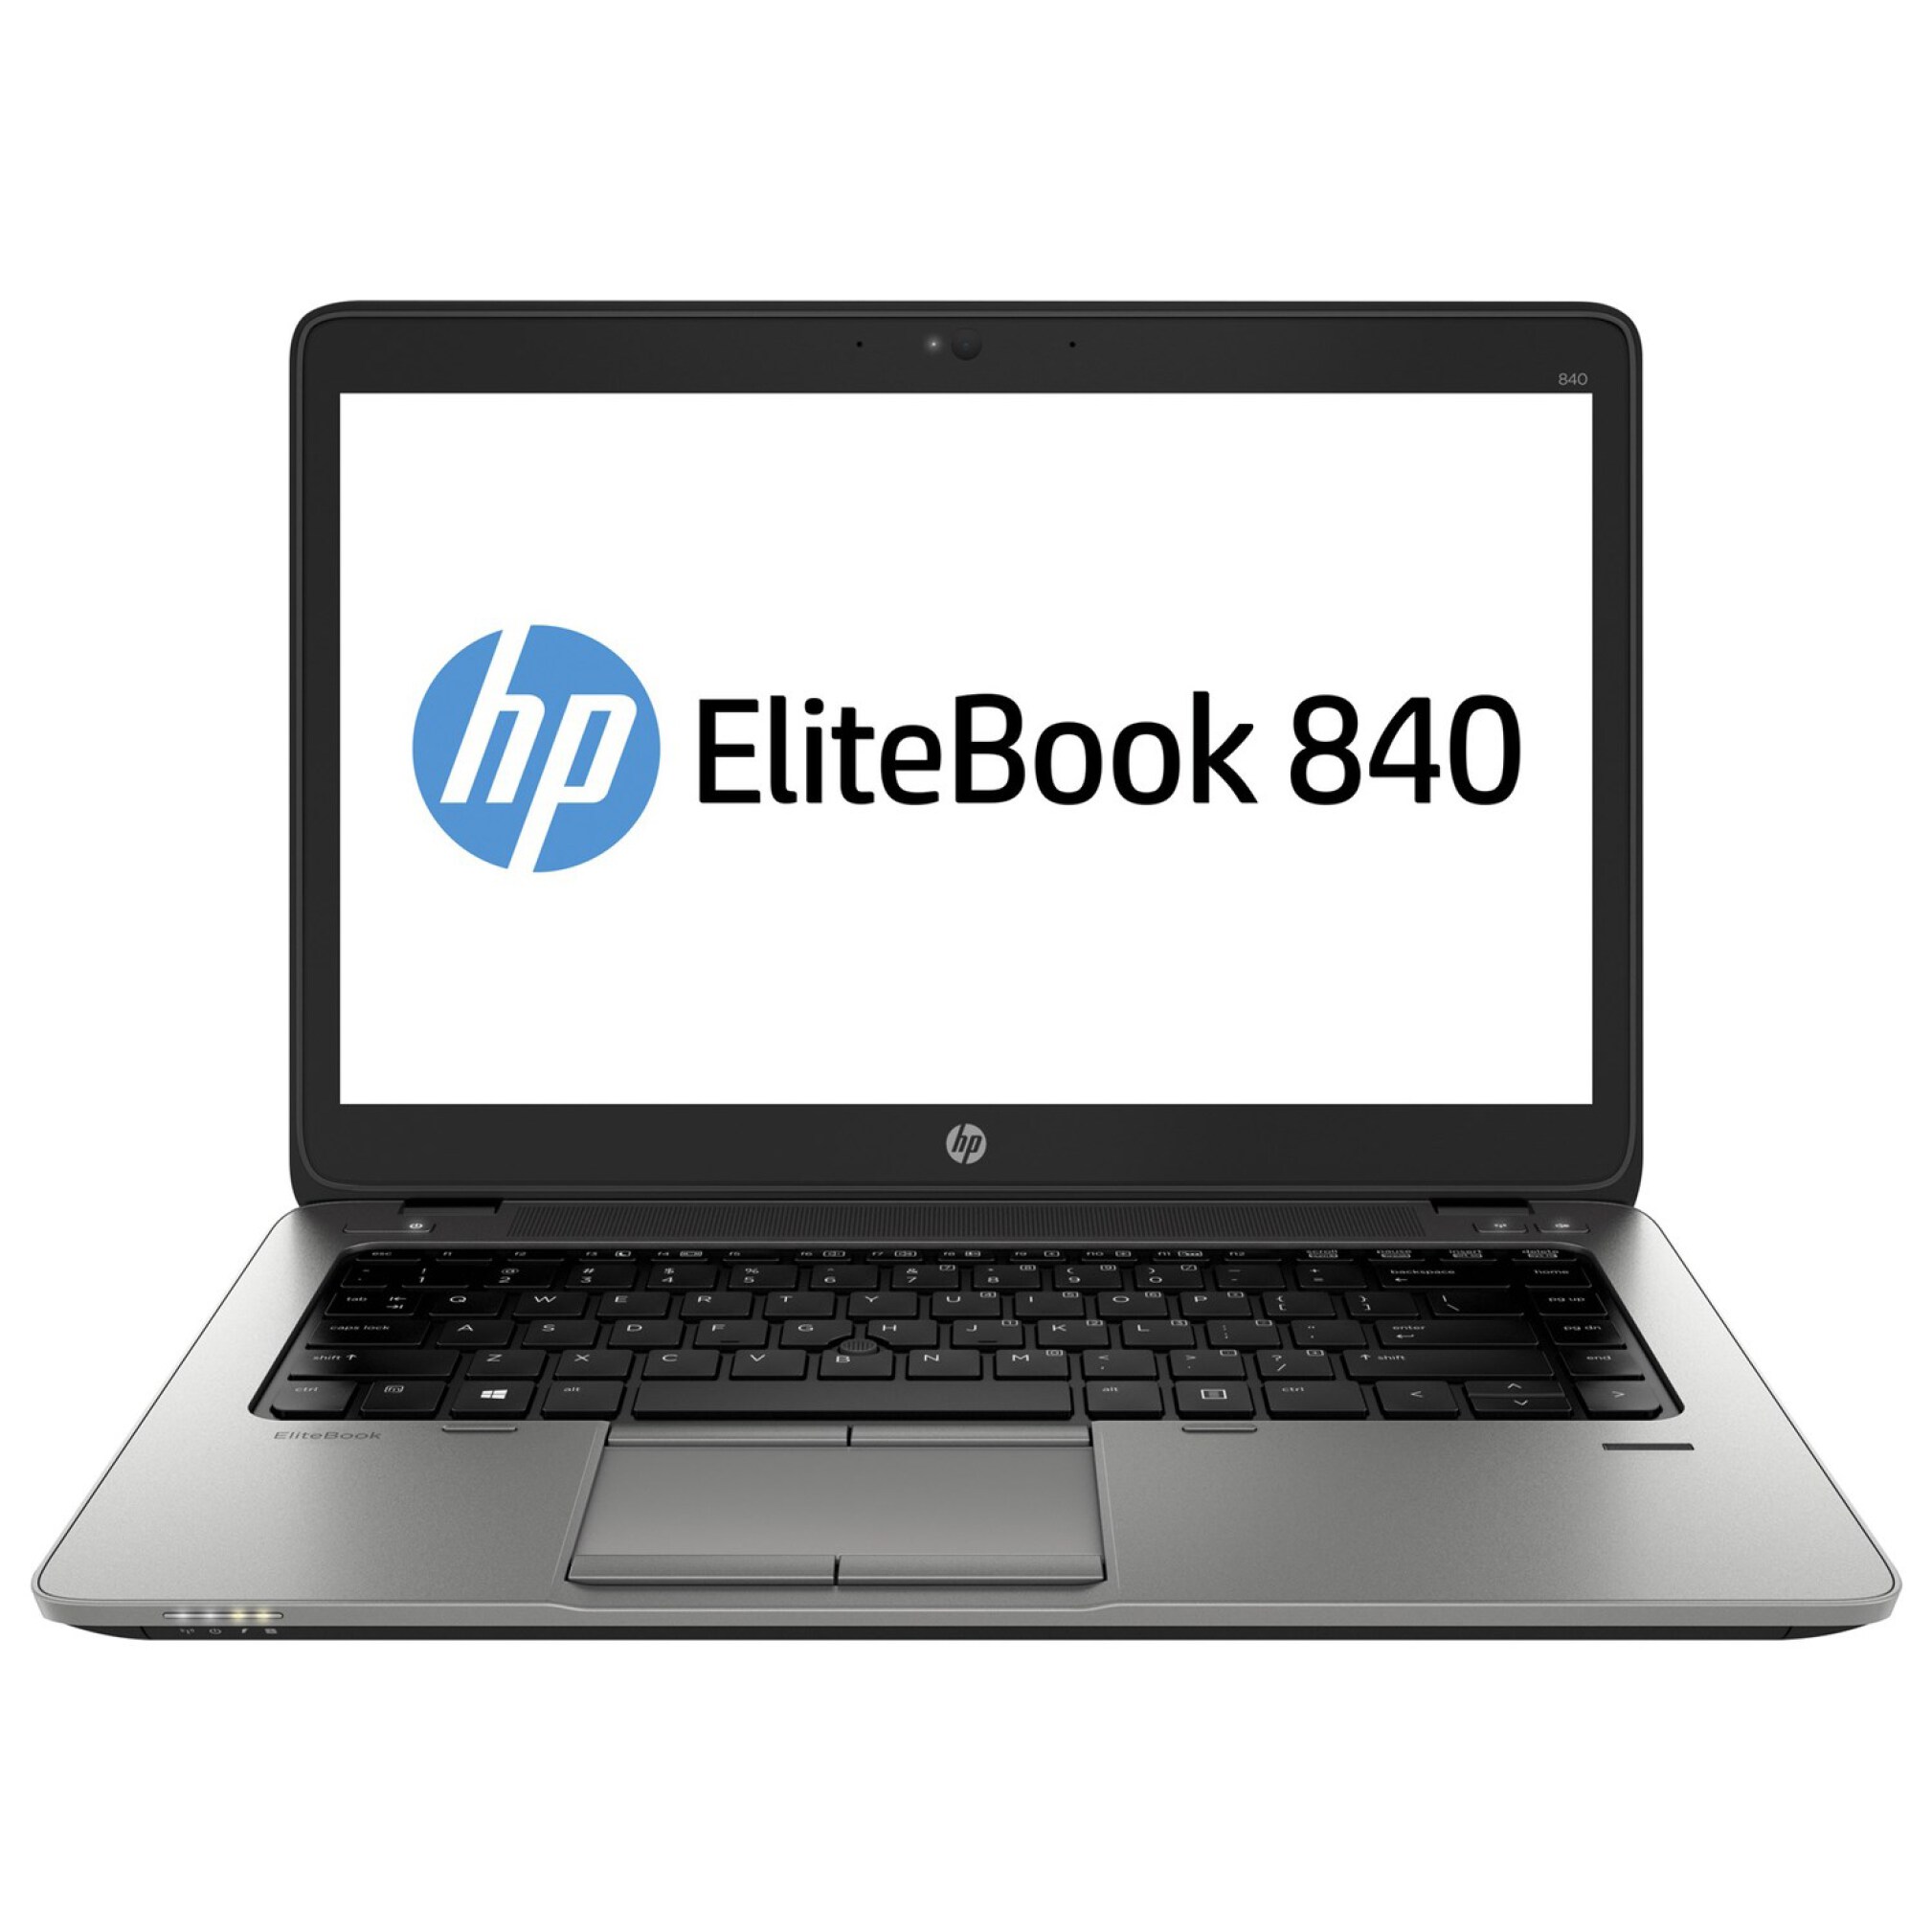  hp Elitebook 840 G1|فروشگاه اینترنتی لاکچری لپ تاپ سبزوار |خرید لپ تاپ دست دوم اچ پی 